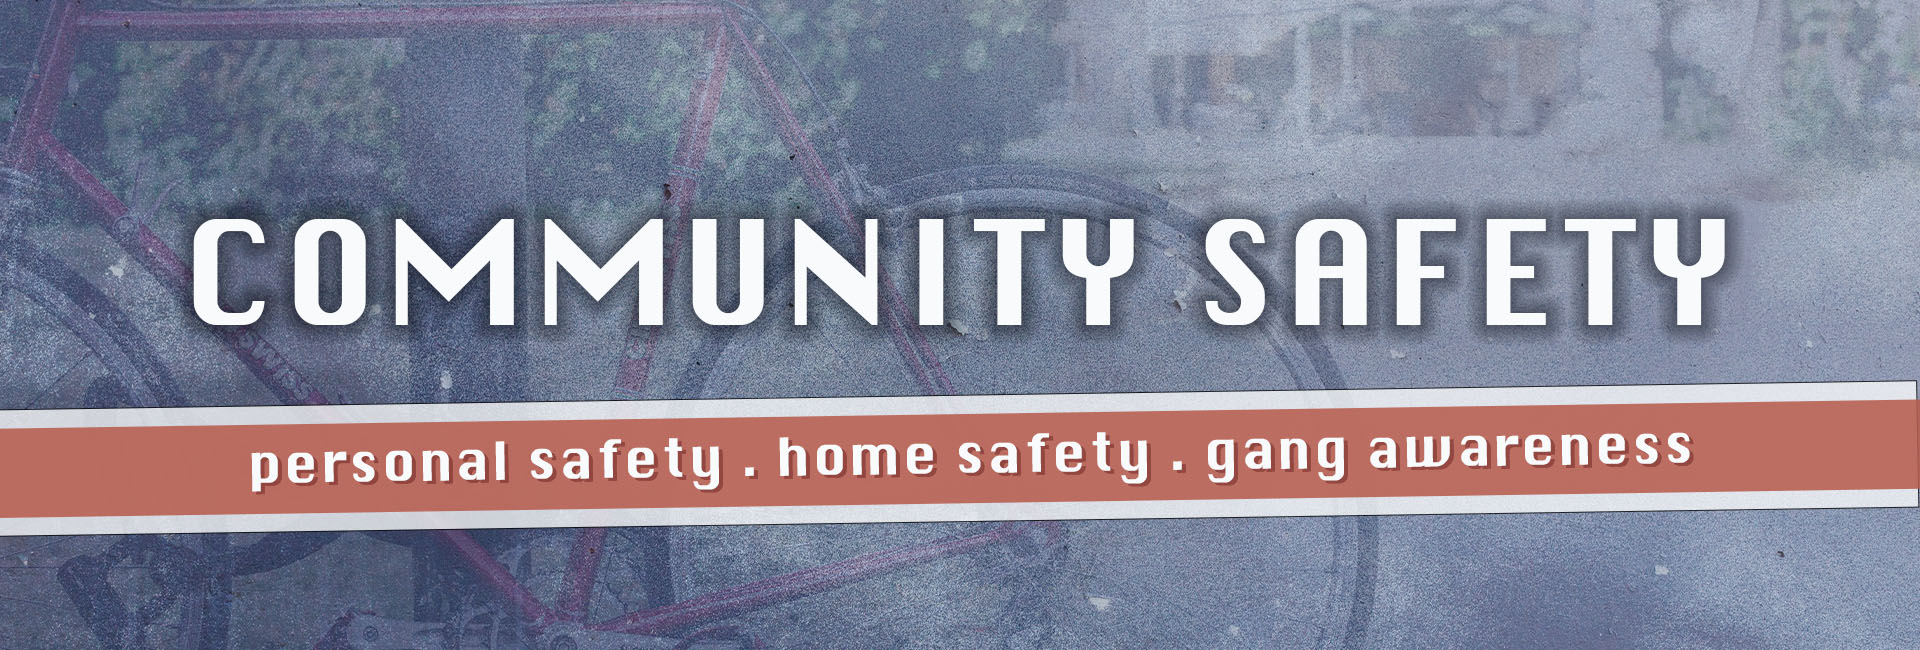 community safety - WEB HEADER